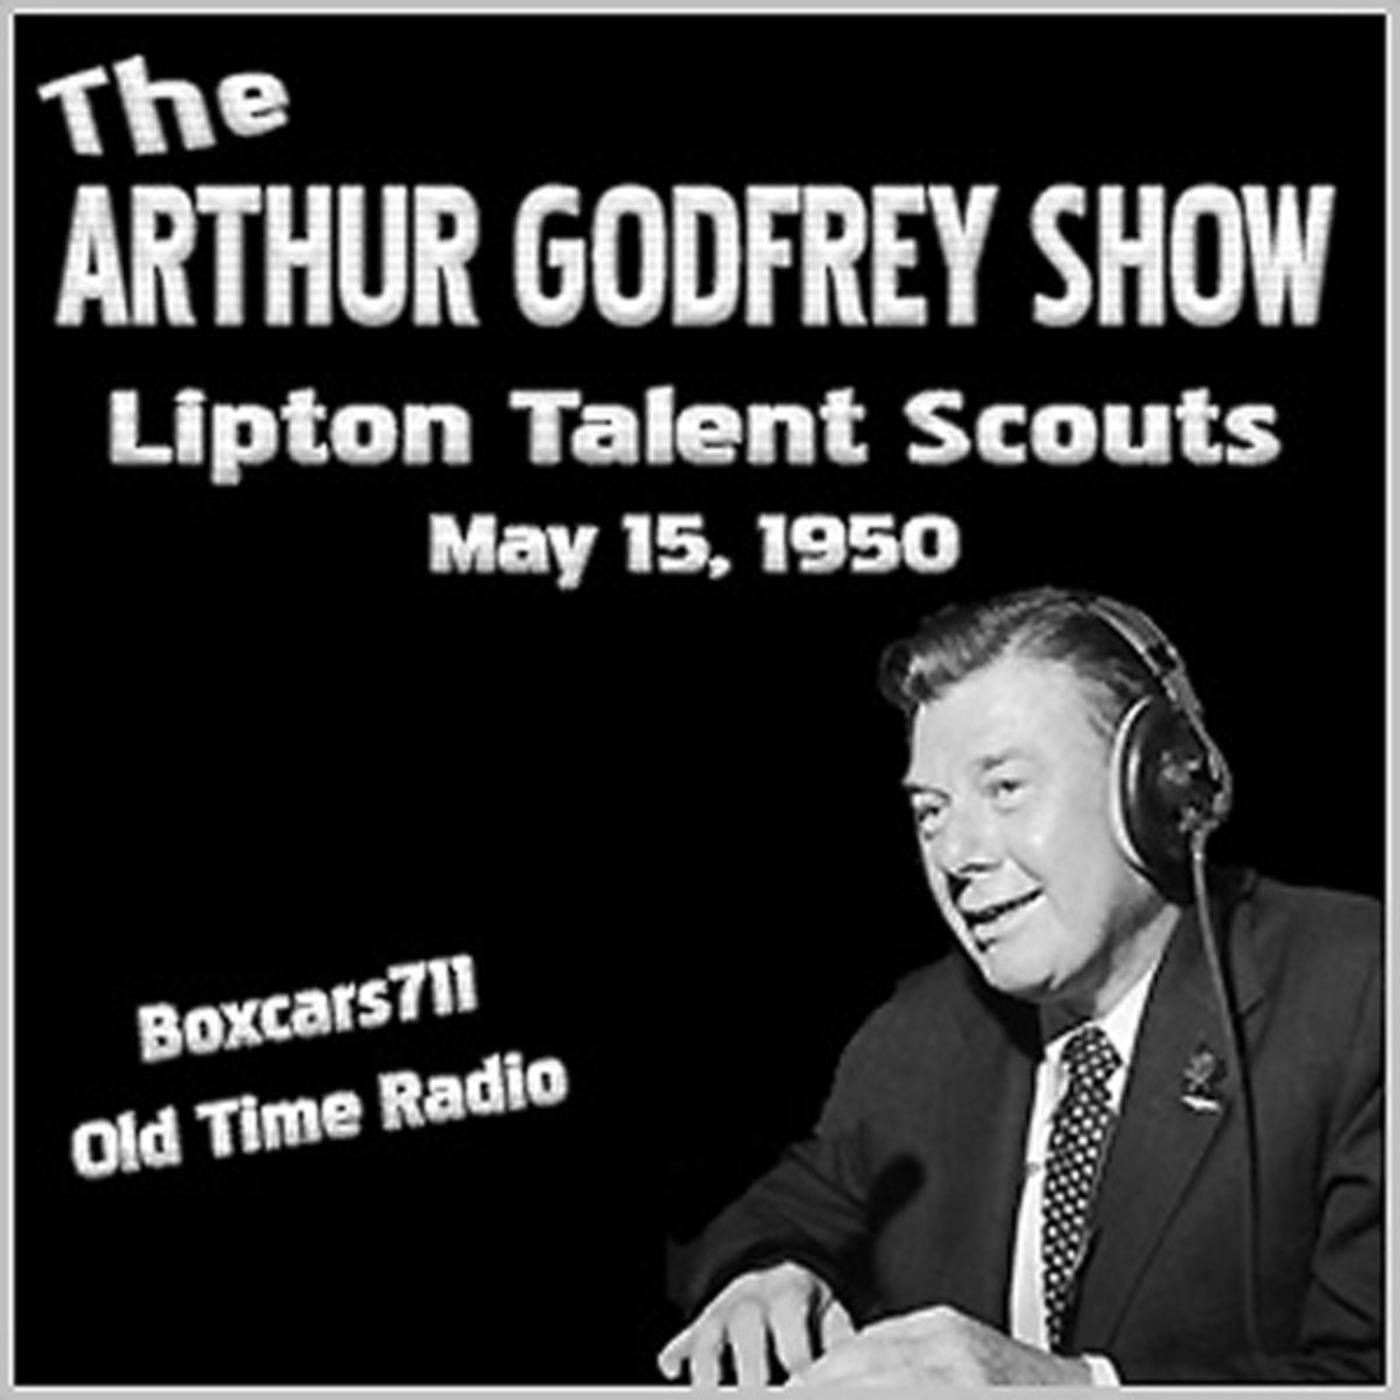 Episode 9702: Arthur Godfrey Show - 